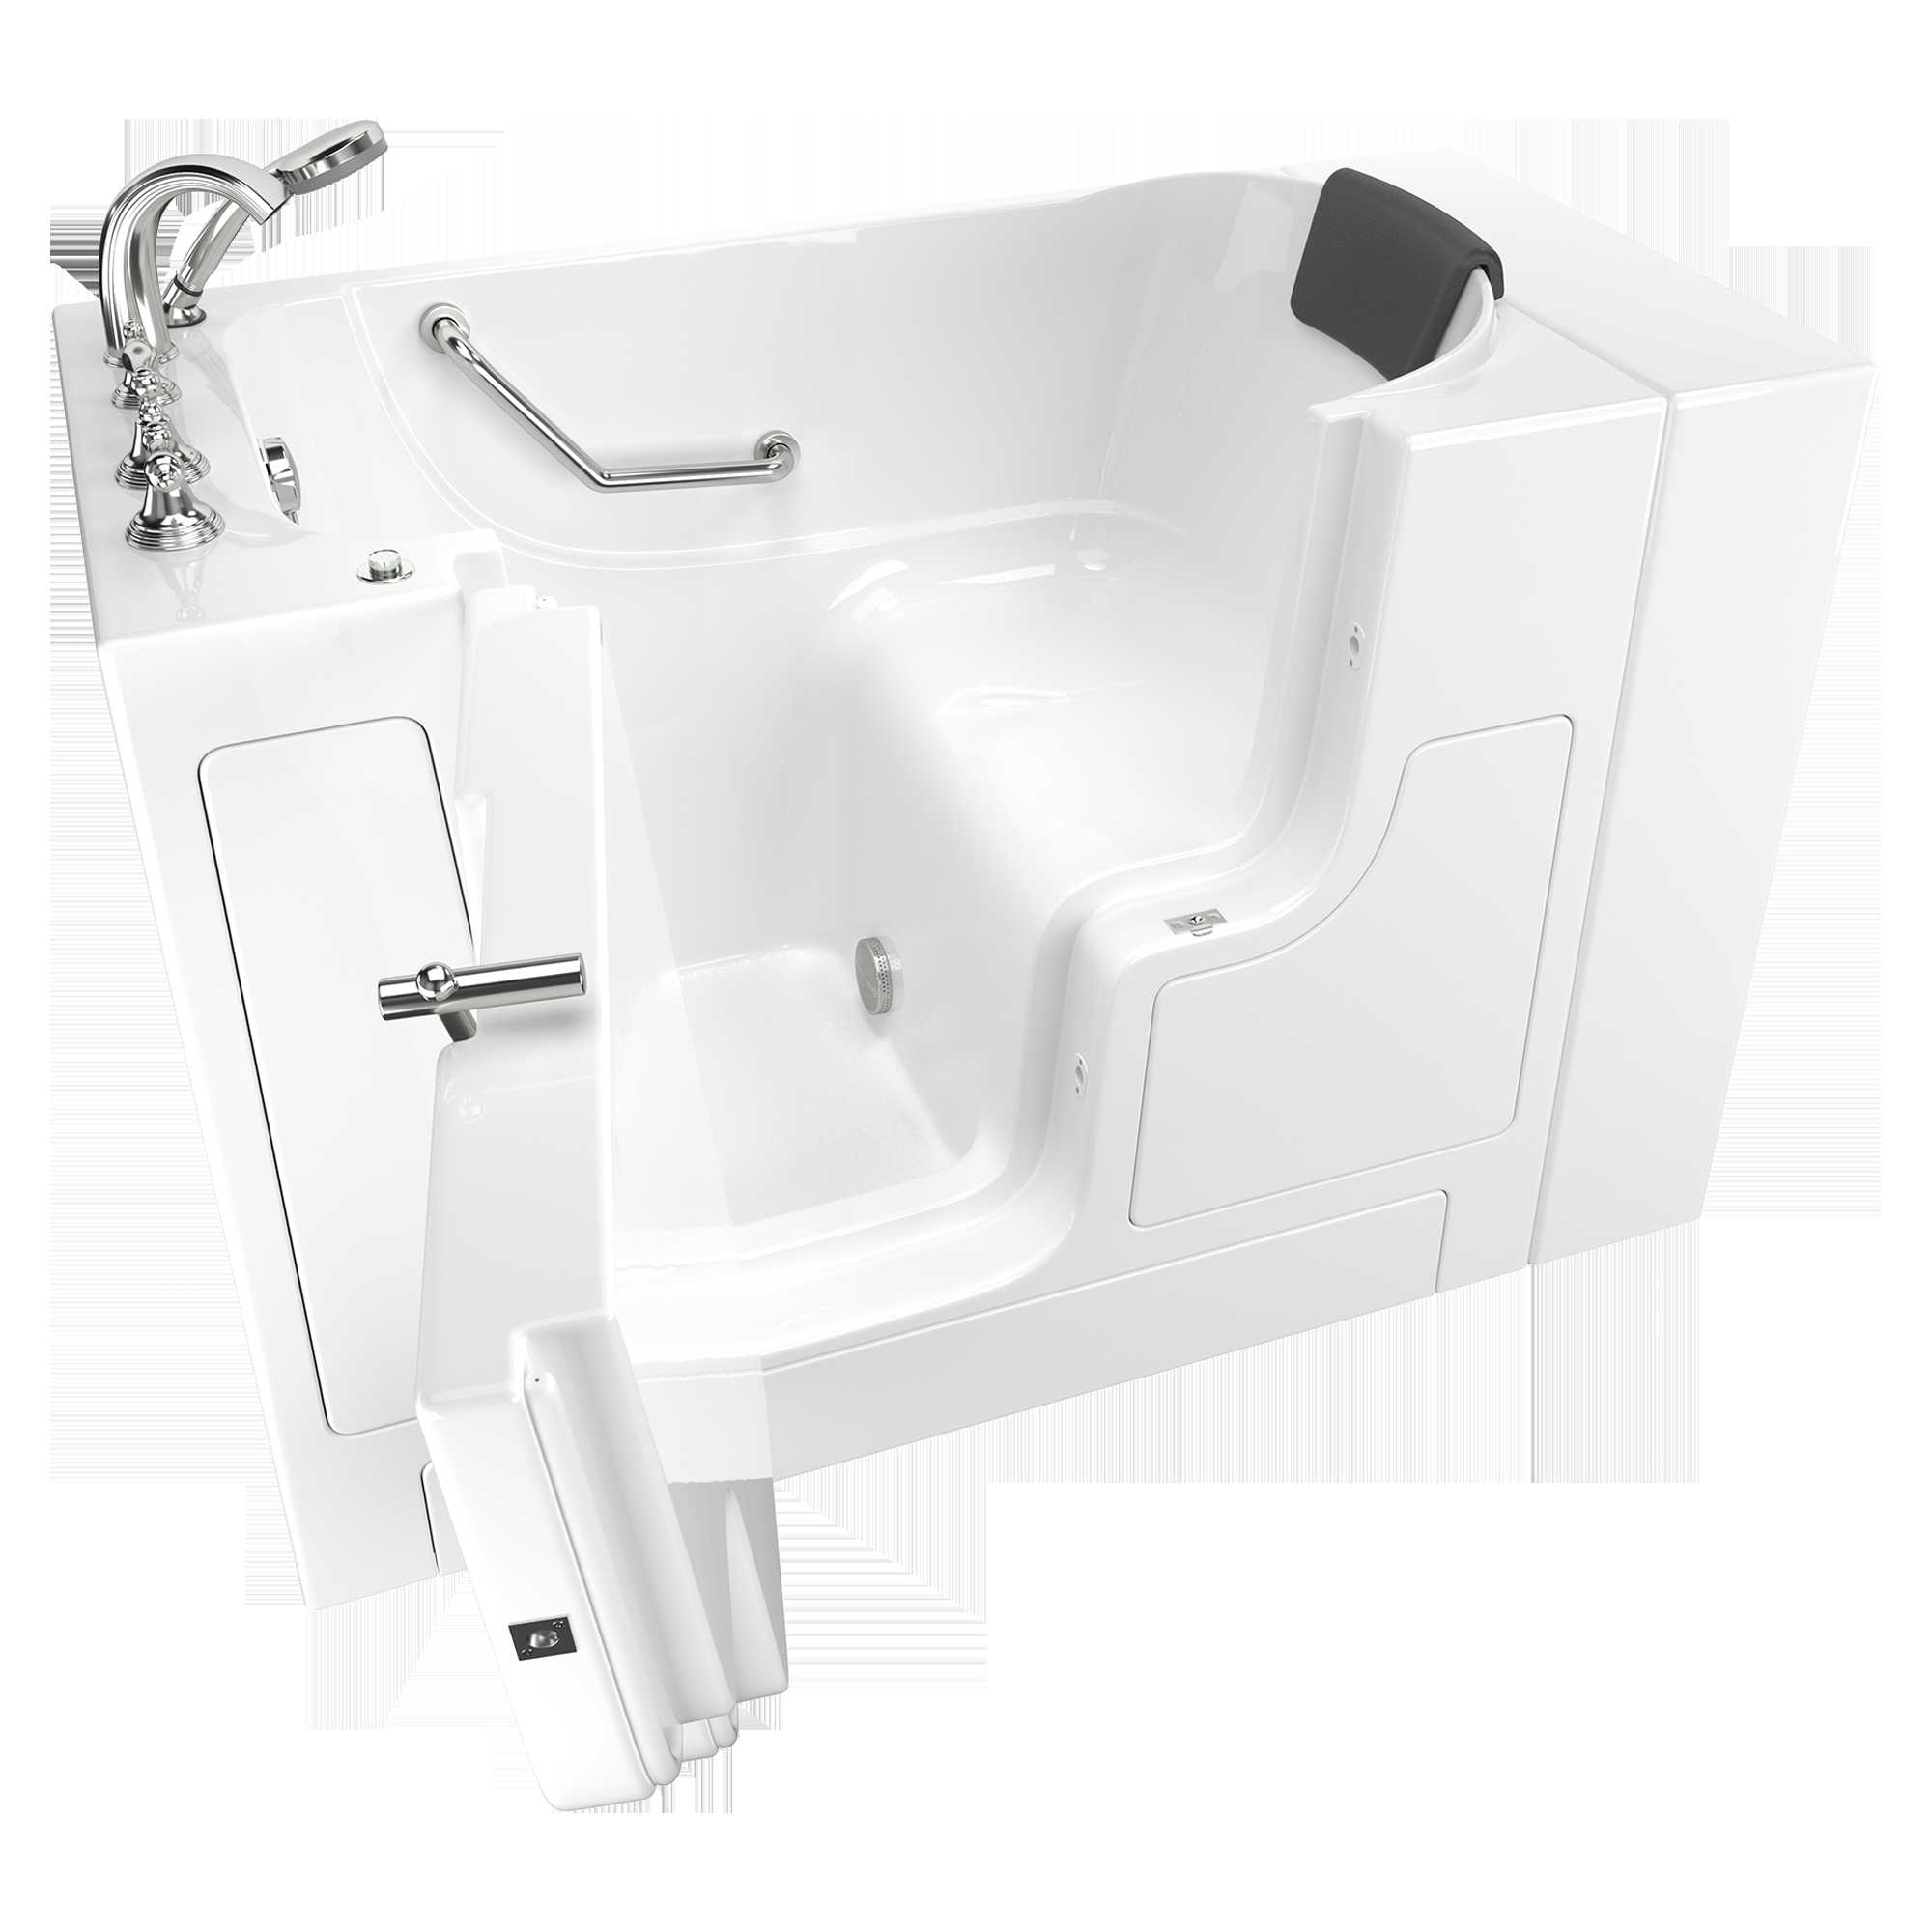 gelcoat premium series walk in tub with tub filler in white